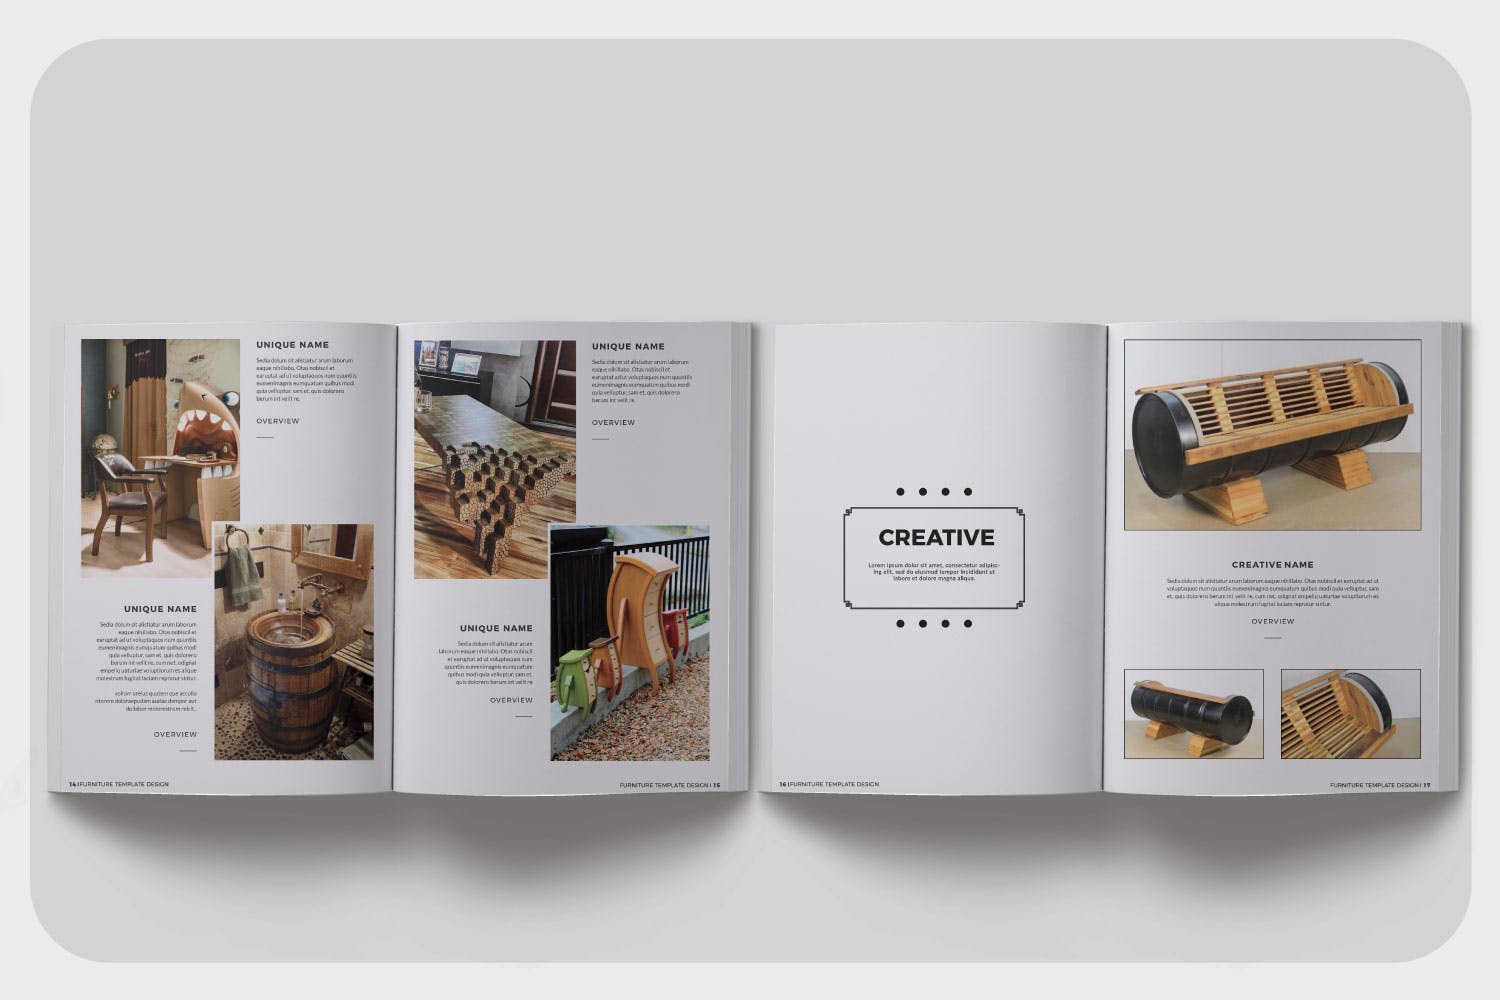 现代家具品牌产品画册Lookbook排版设计模板 Furniture Collection Lookbook插图(4)